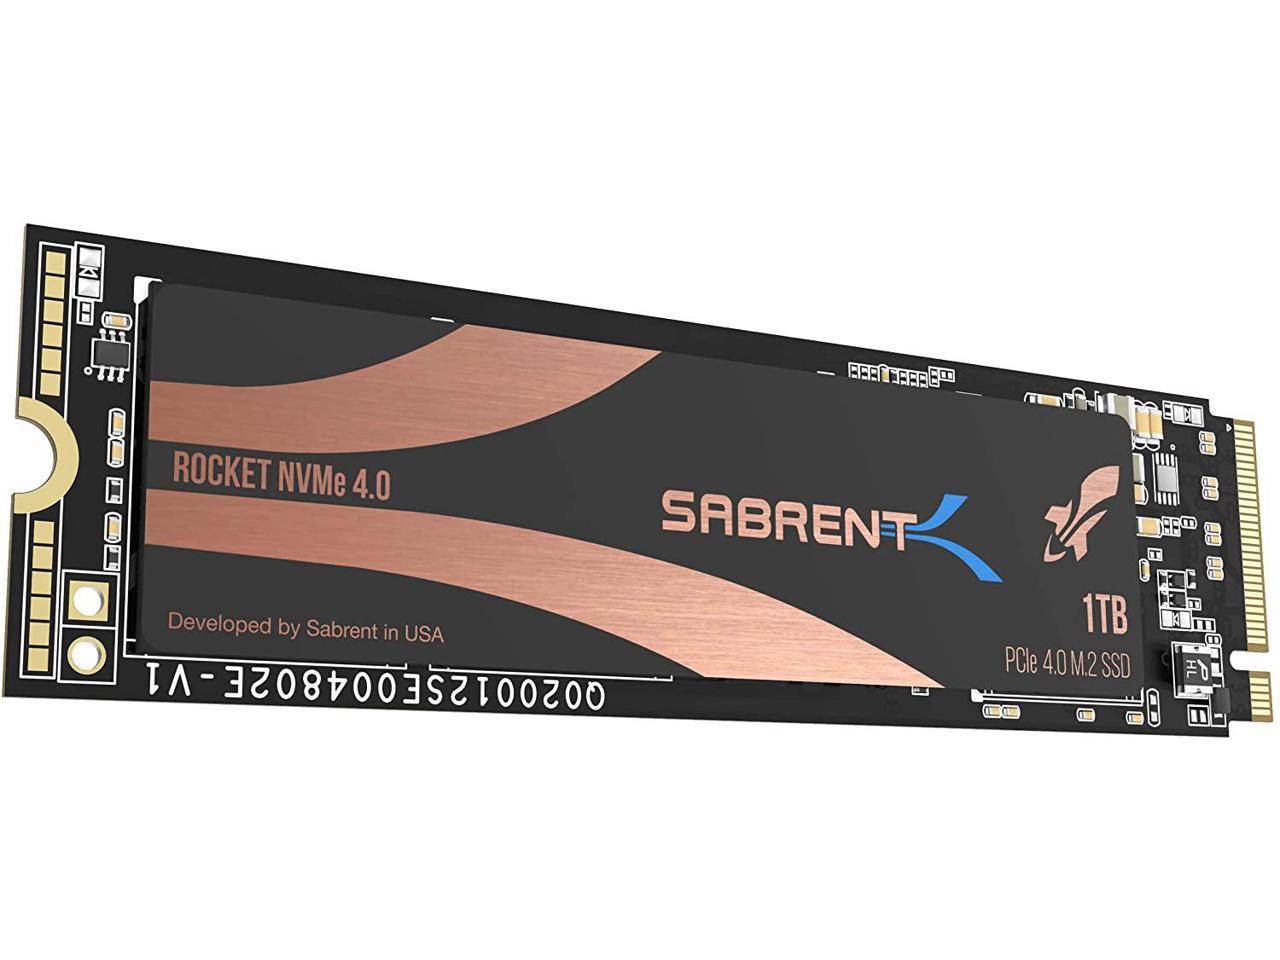 Sabrent 1TB Rocket NVMe 4.0 Gen4 PCIe M.2 Internal SSD $110.49 + Free Shipping